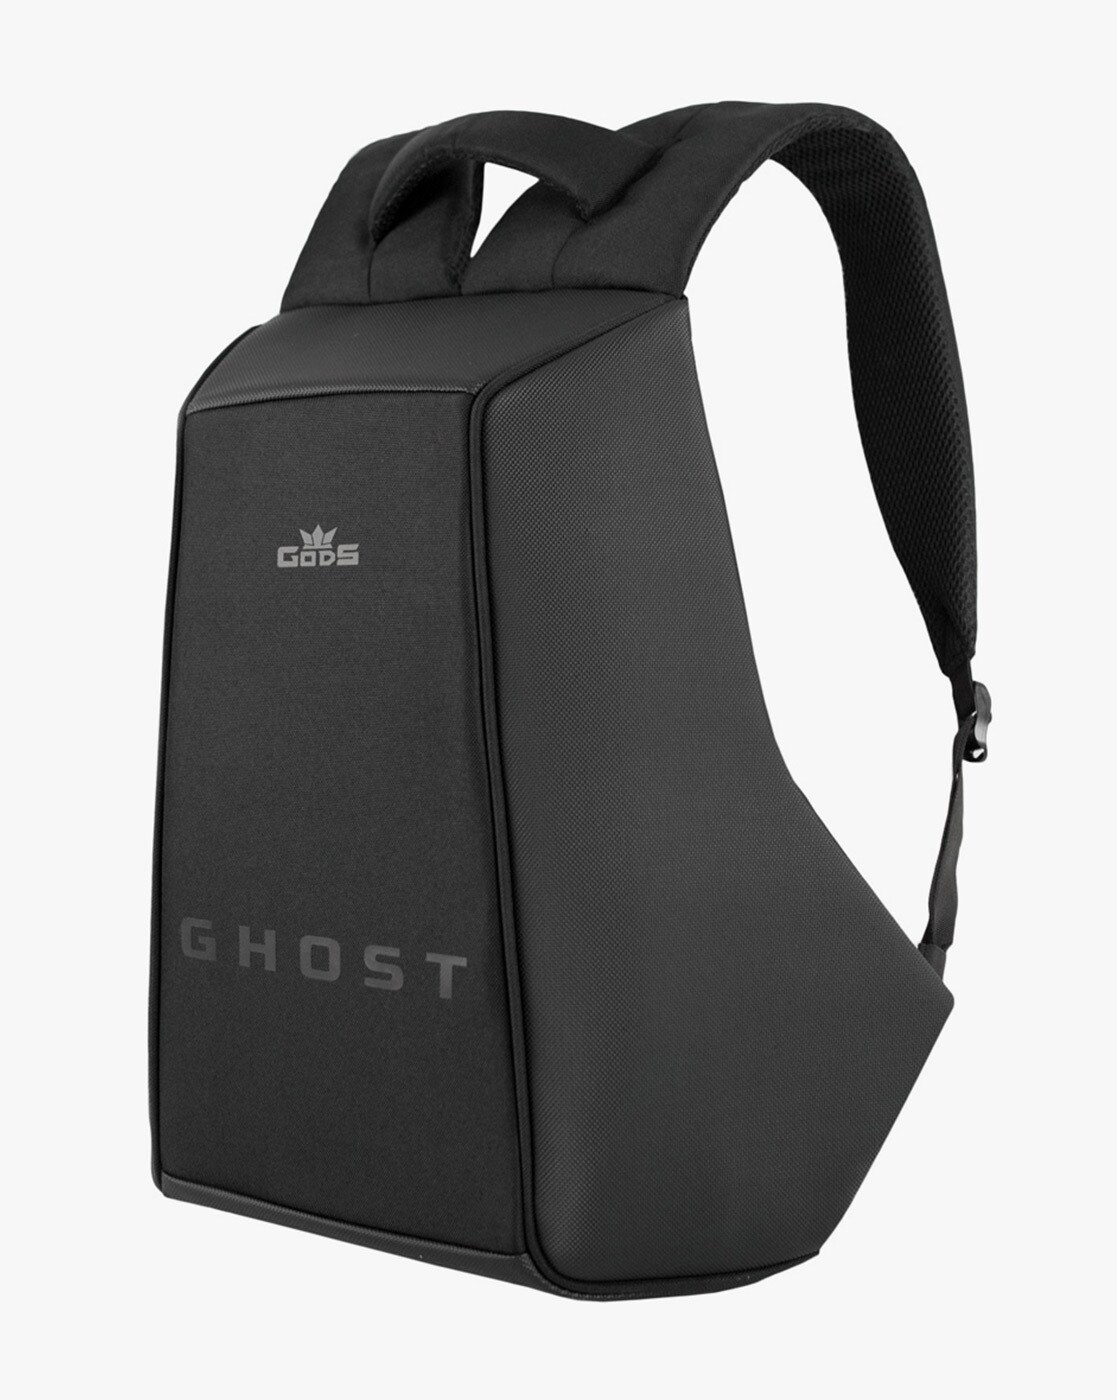 Amazon.com : Golf Gods - Cool Tech Semi-Waterproof Stand Bag - Grey :  Sports & Outdoors